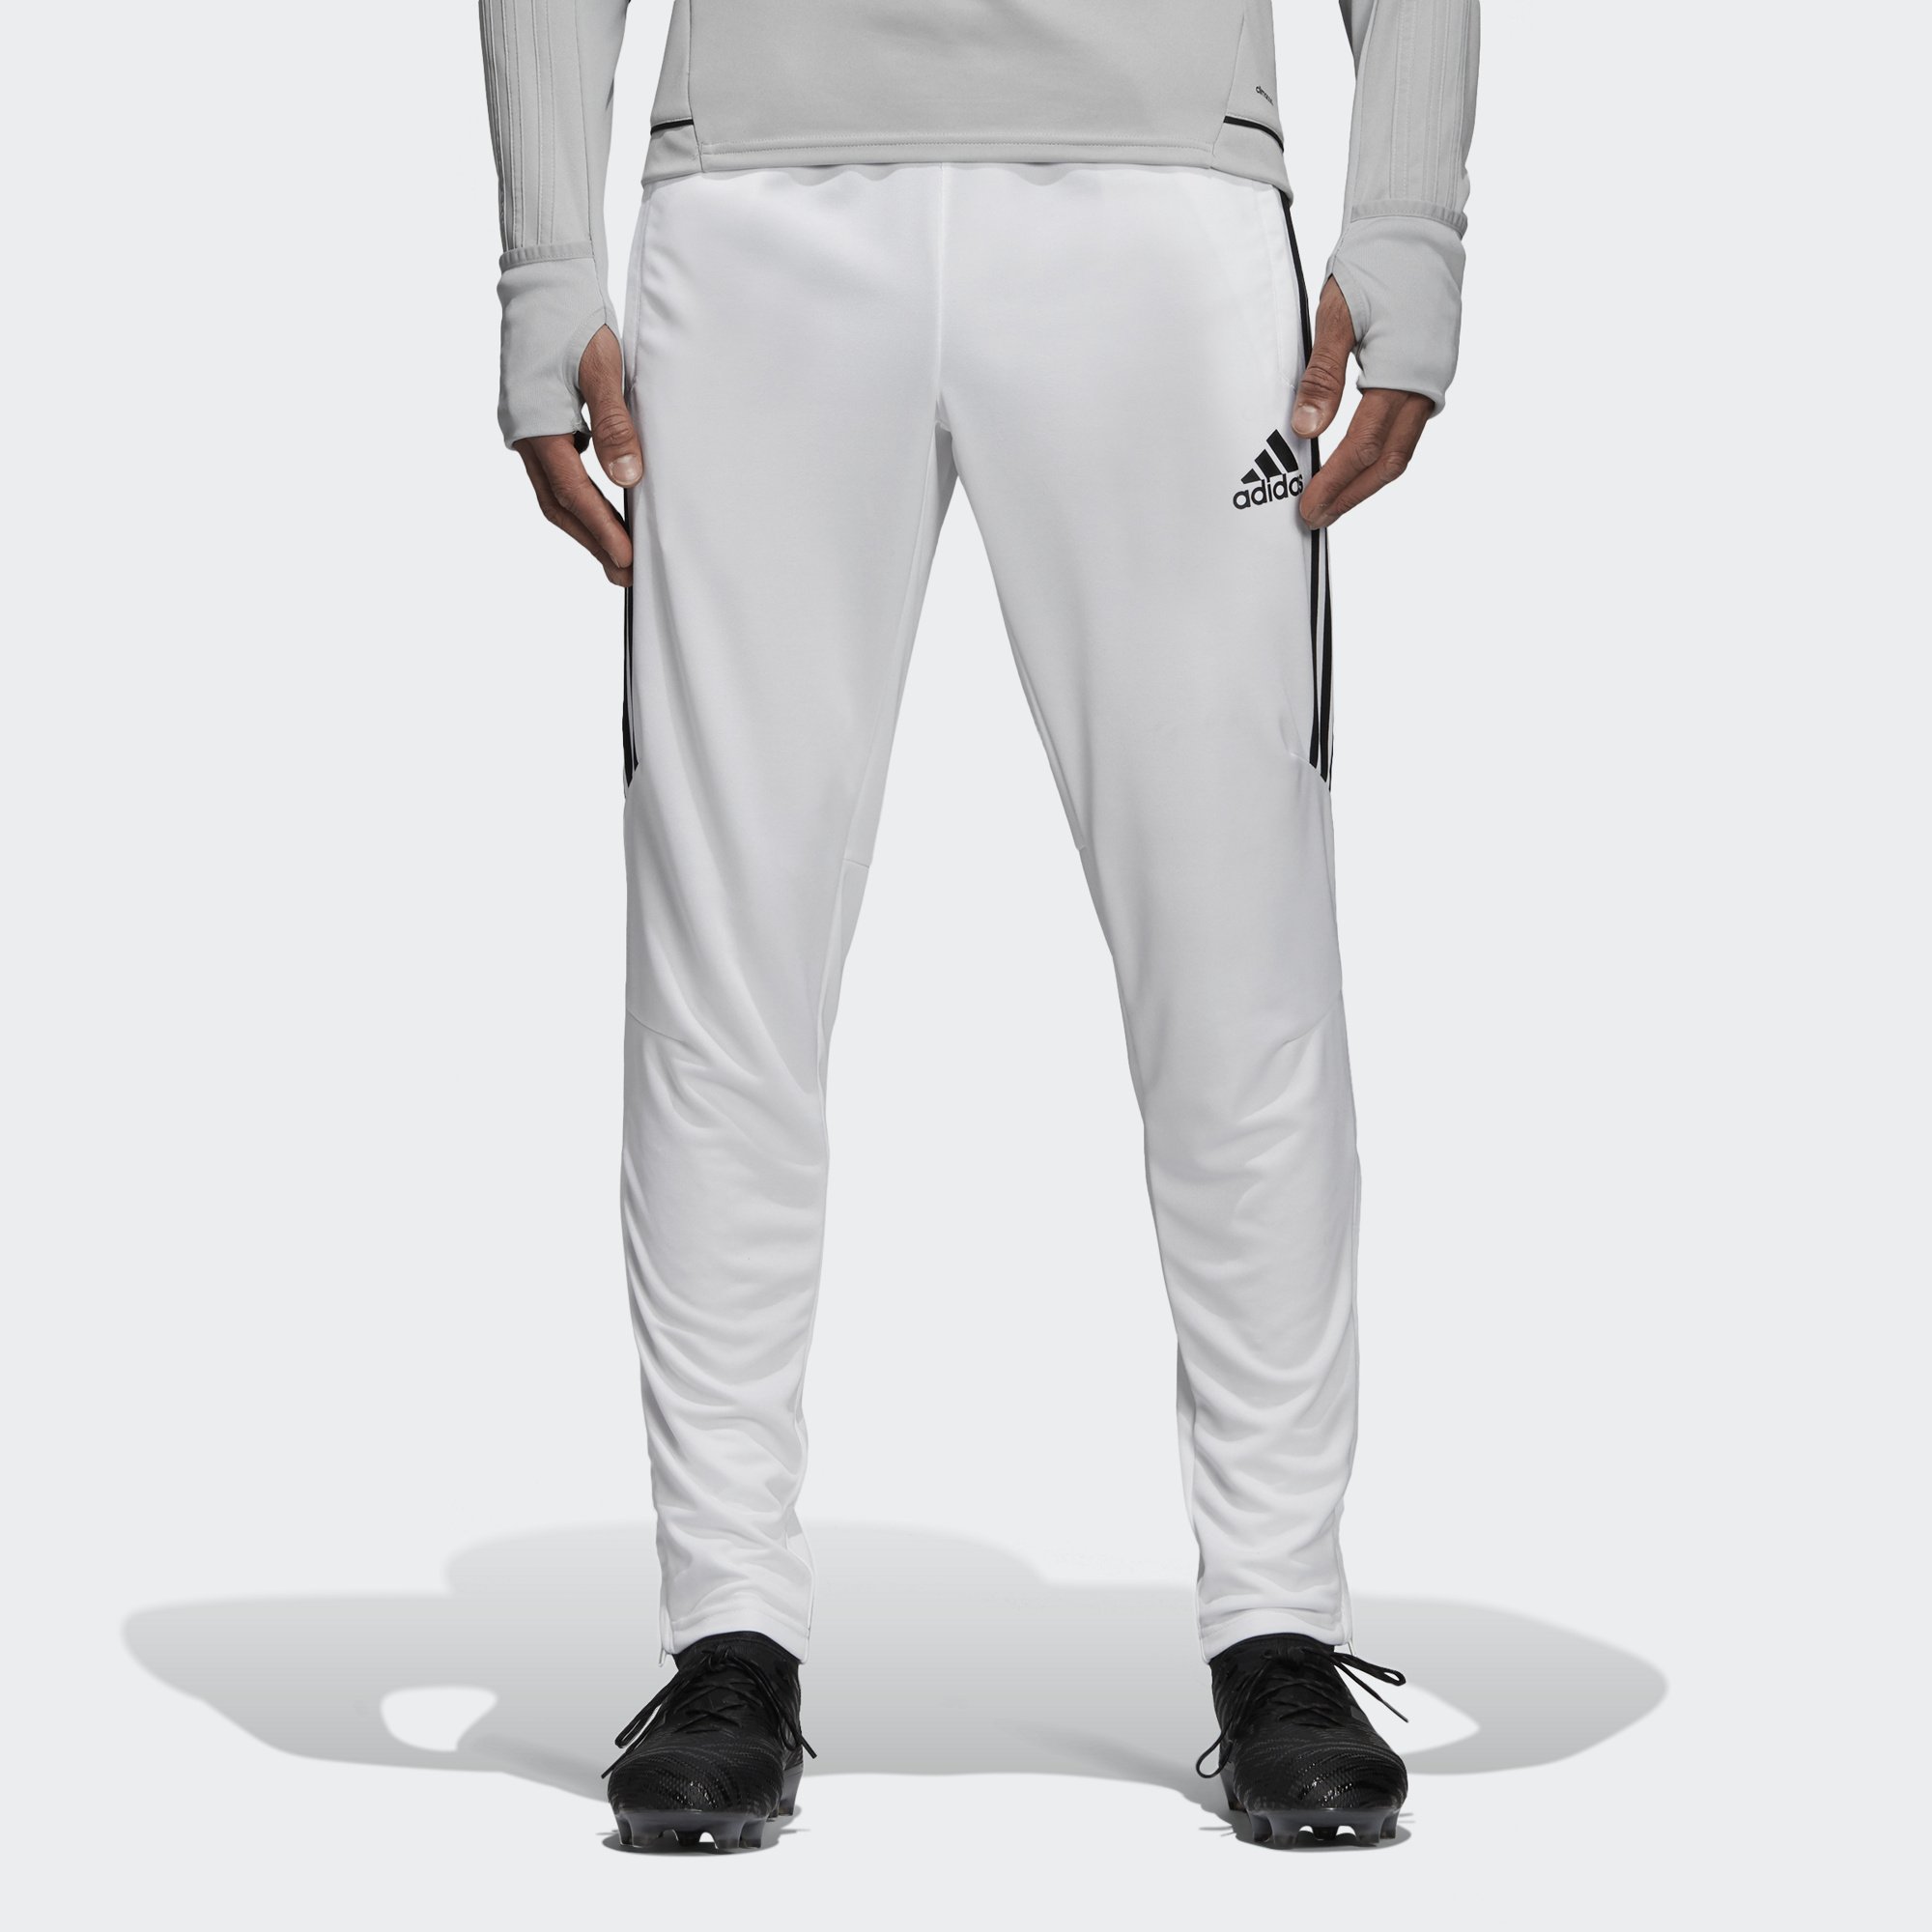 adidas Men's Soccer Tiro 17 Pants, White/Black, XXX-Large